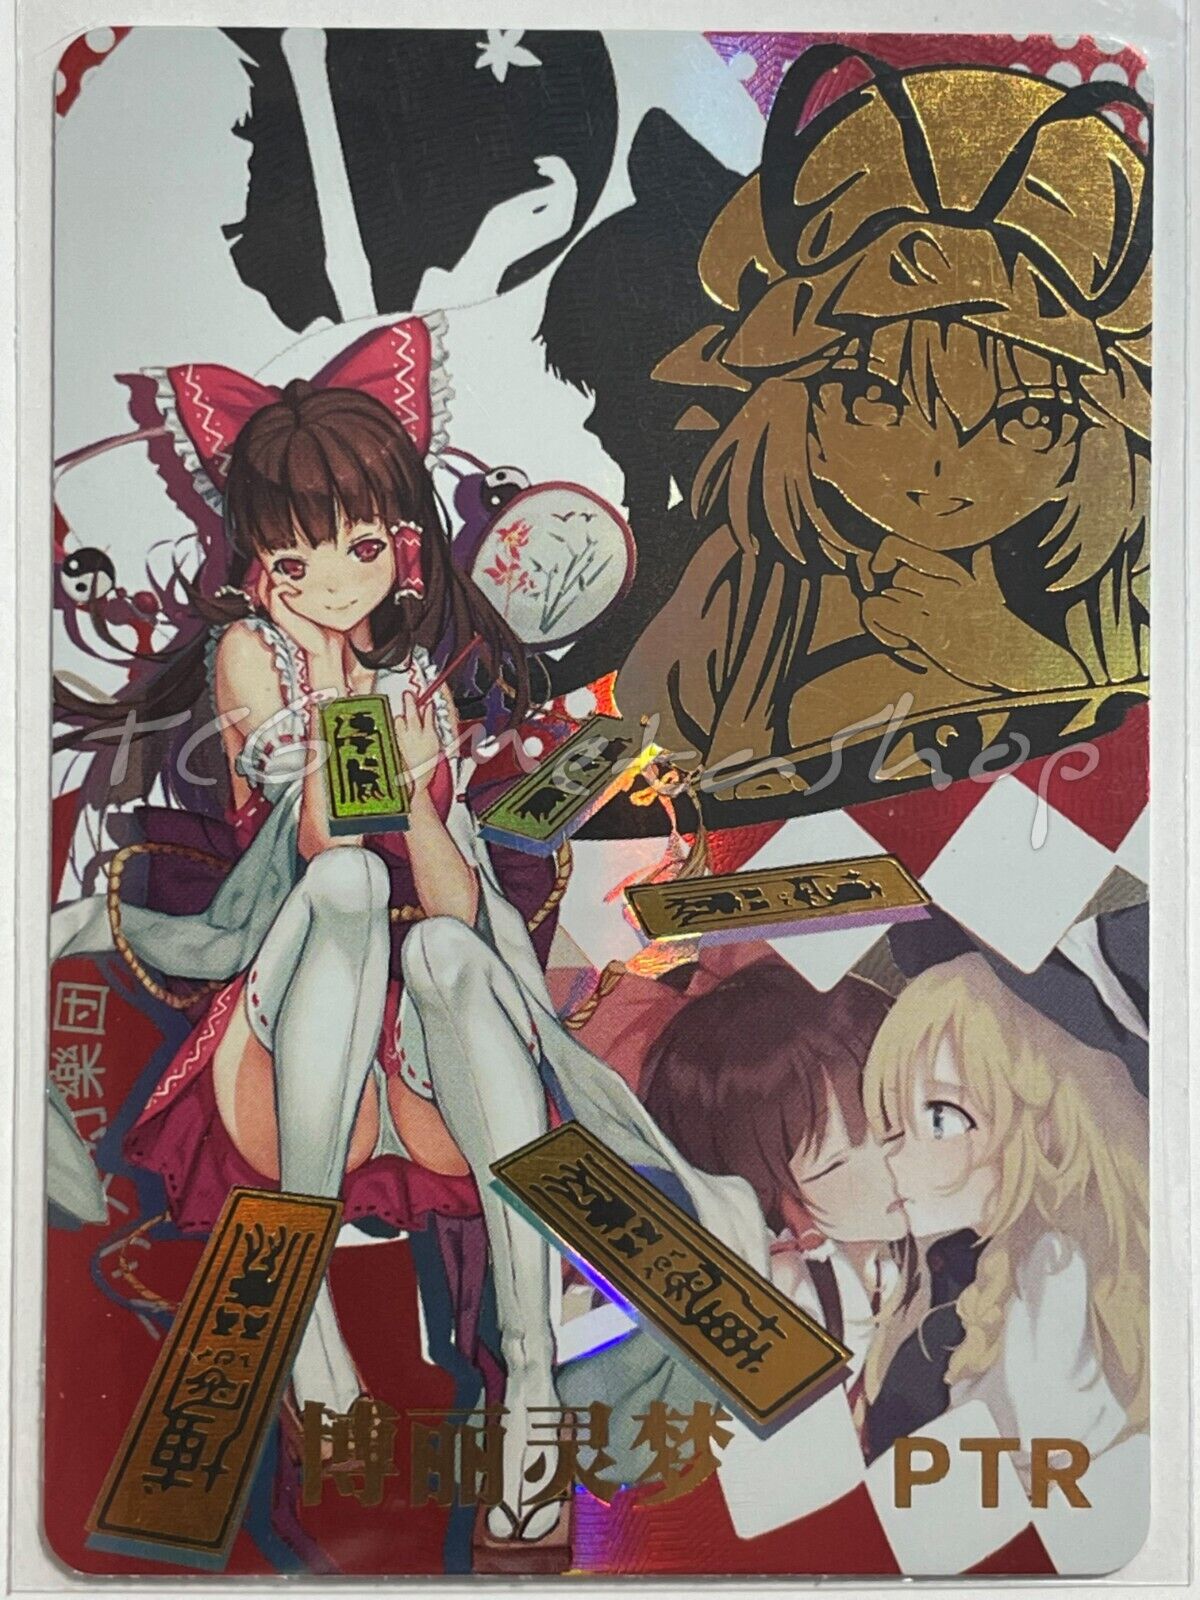 🔥 Goddess Story - 2m03 - [Pick Your Singles] Waifu Anime Doujin Cards 🔥